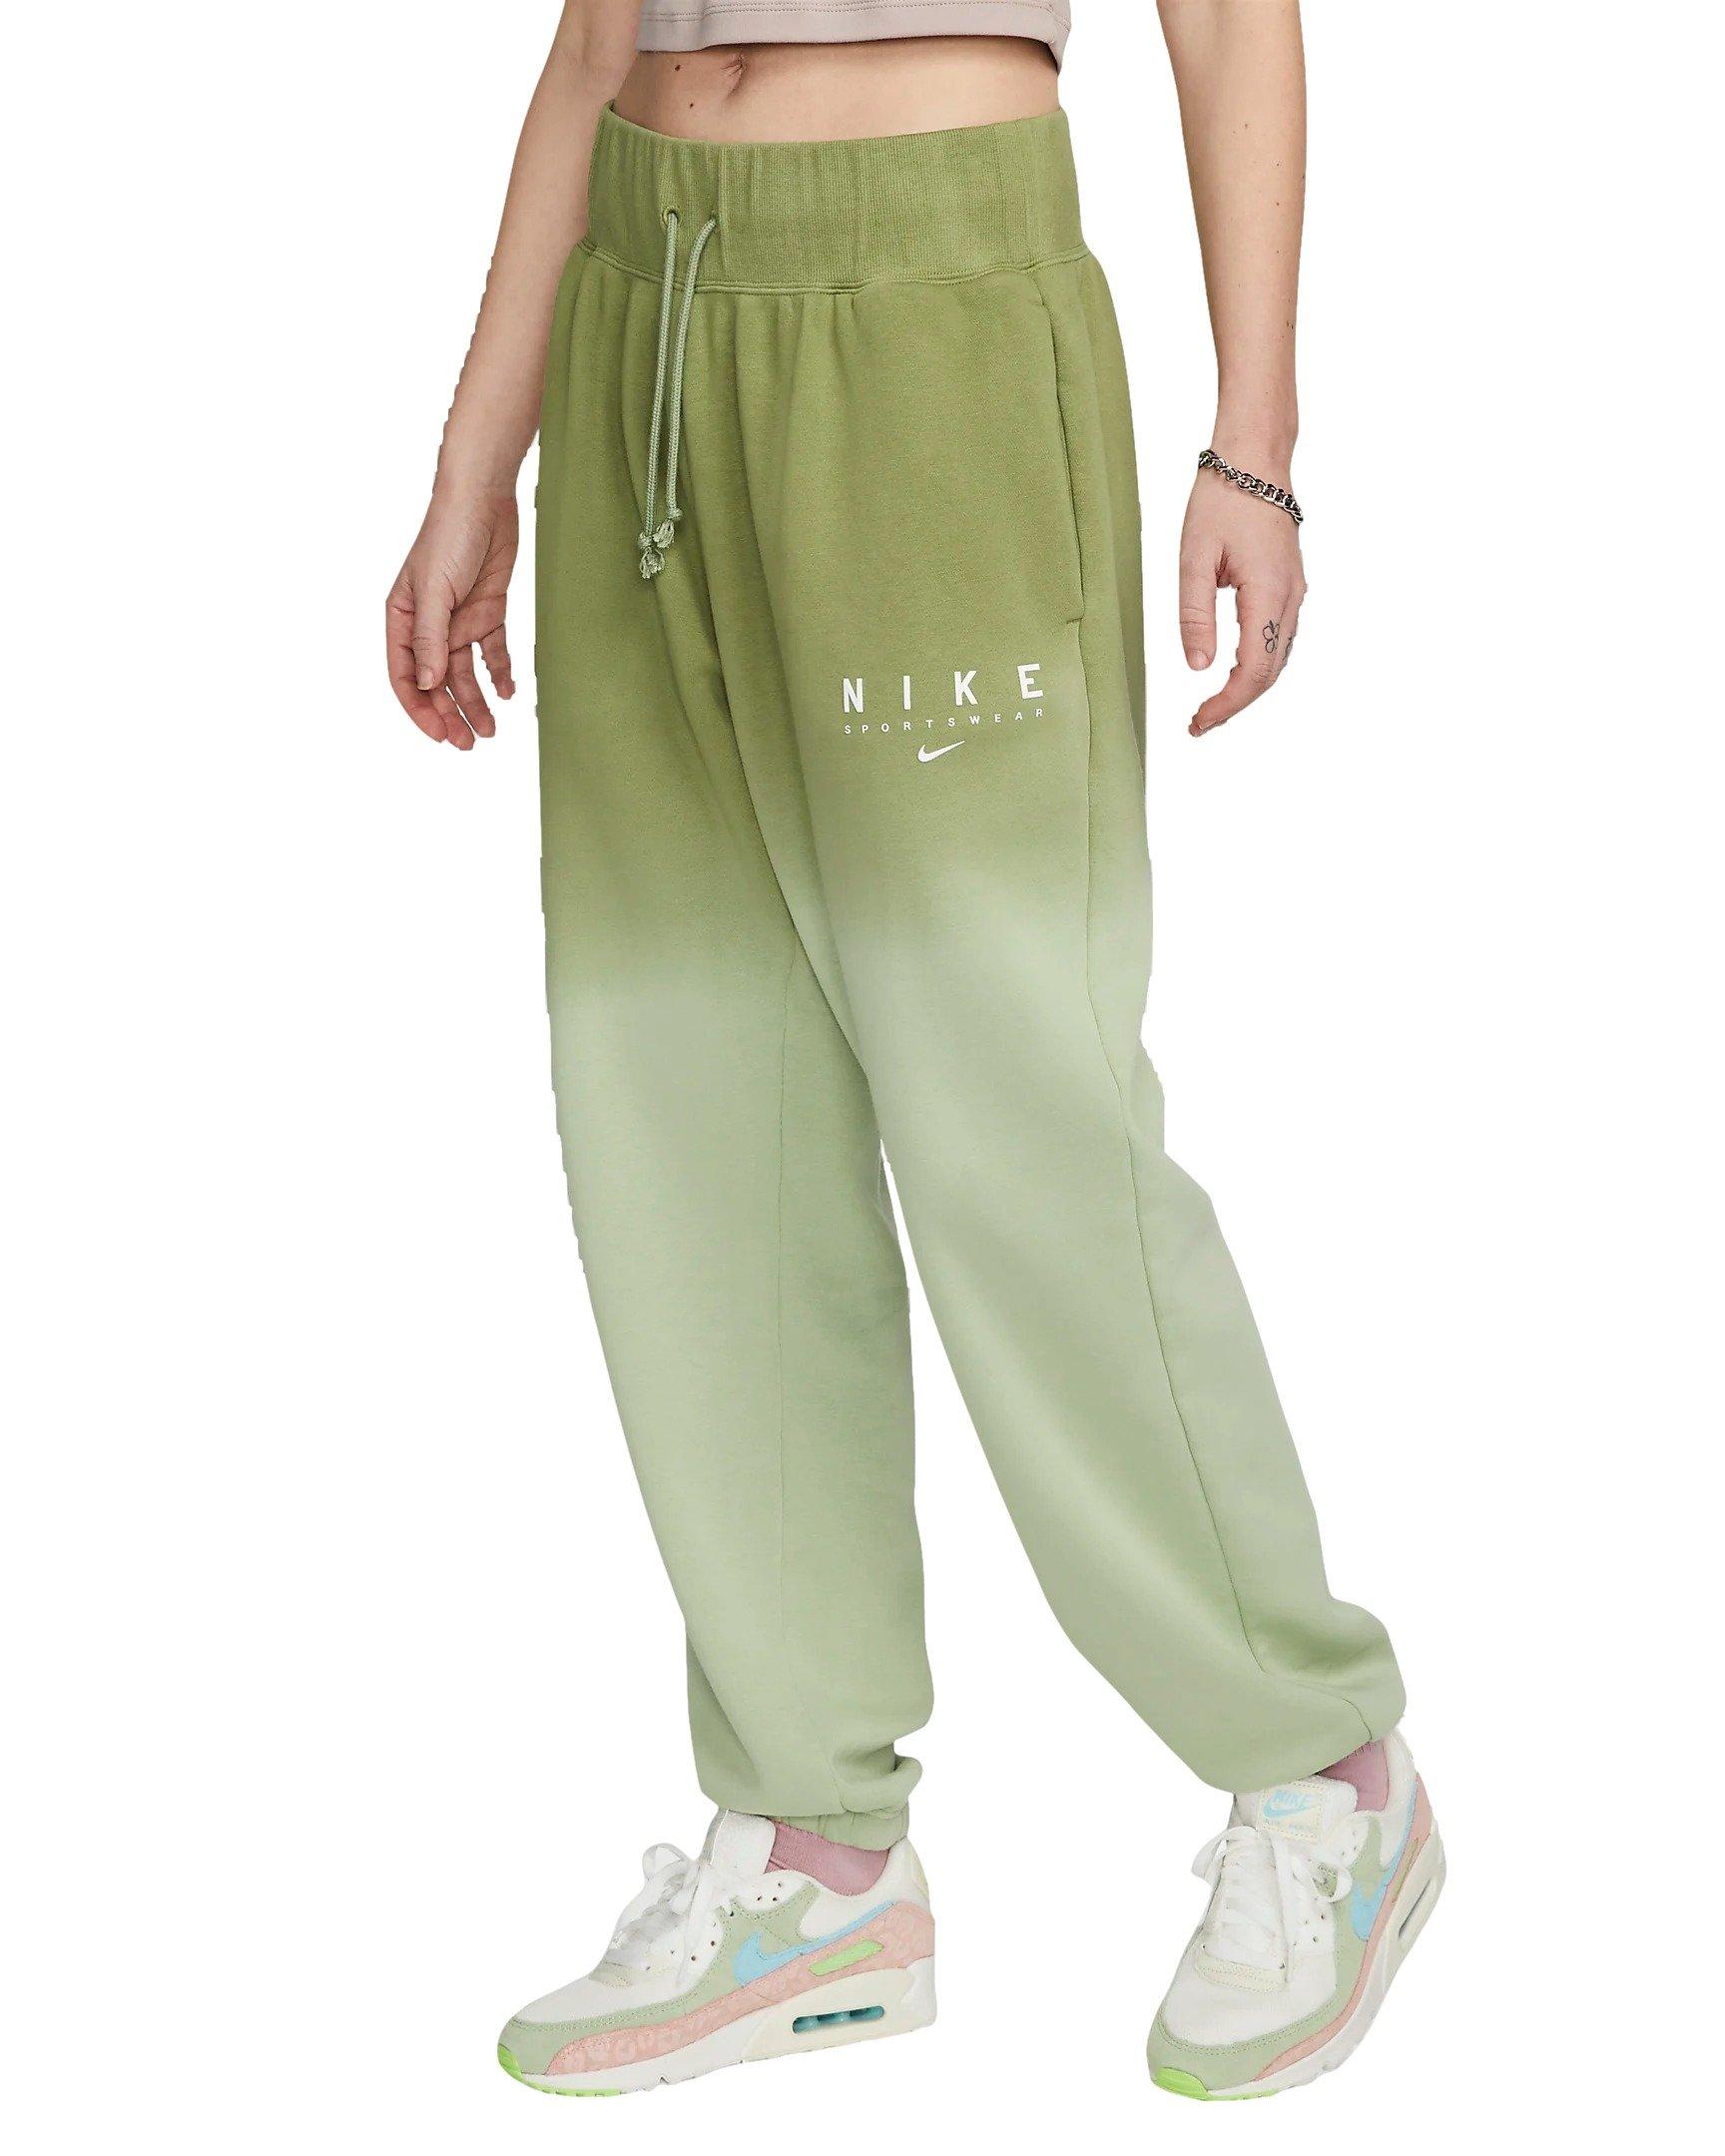 Nike Sportswear PHOENIX FLEECE PANT - Sweatshirt - oil green/khaki -  Zalando.de